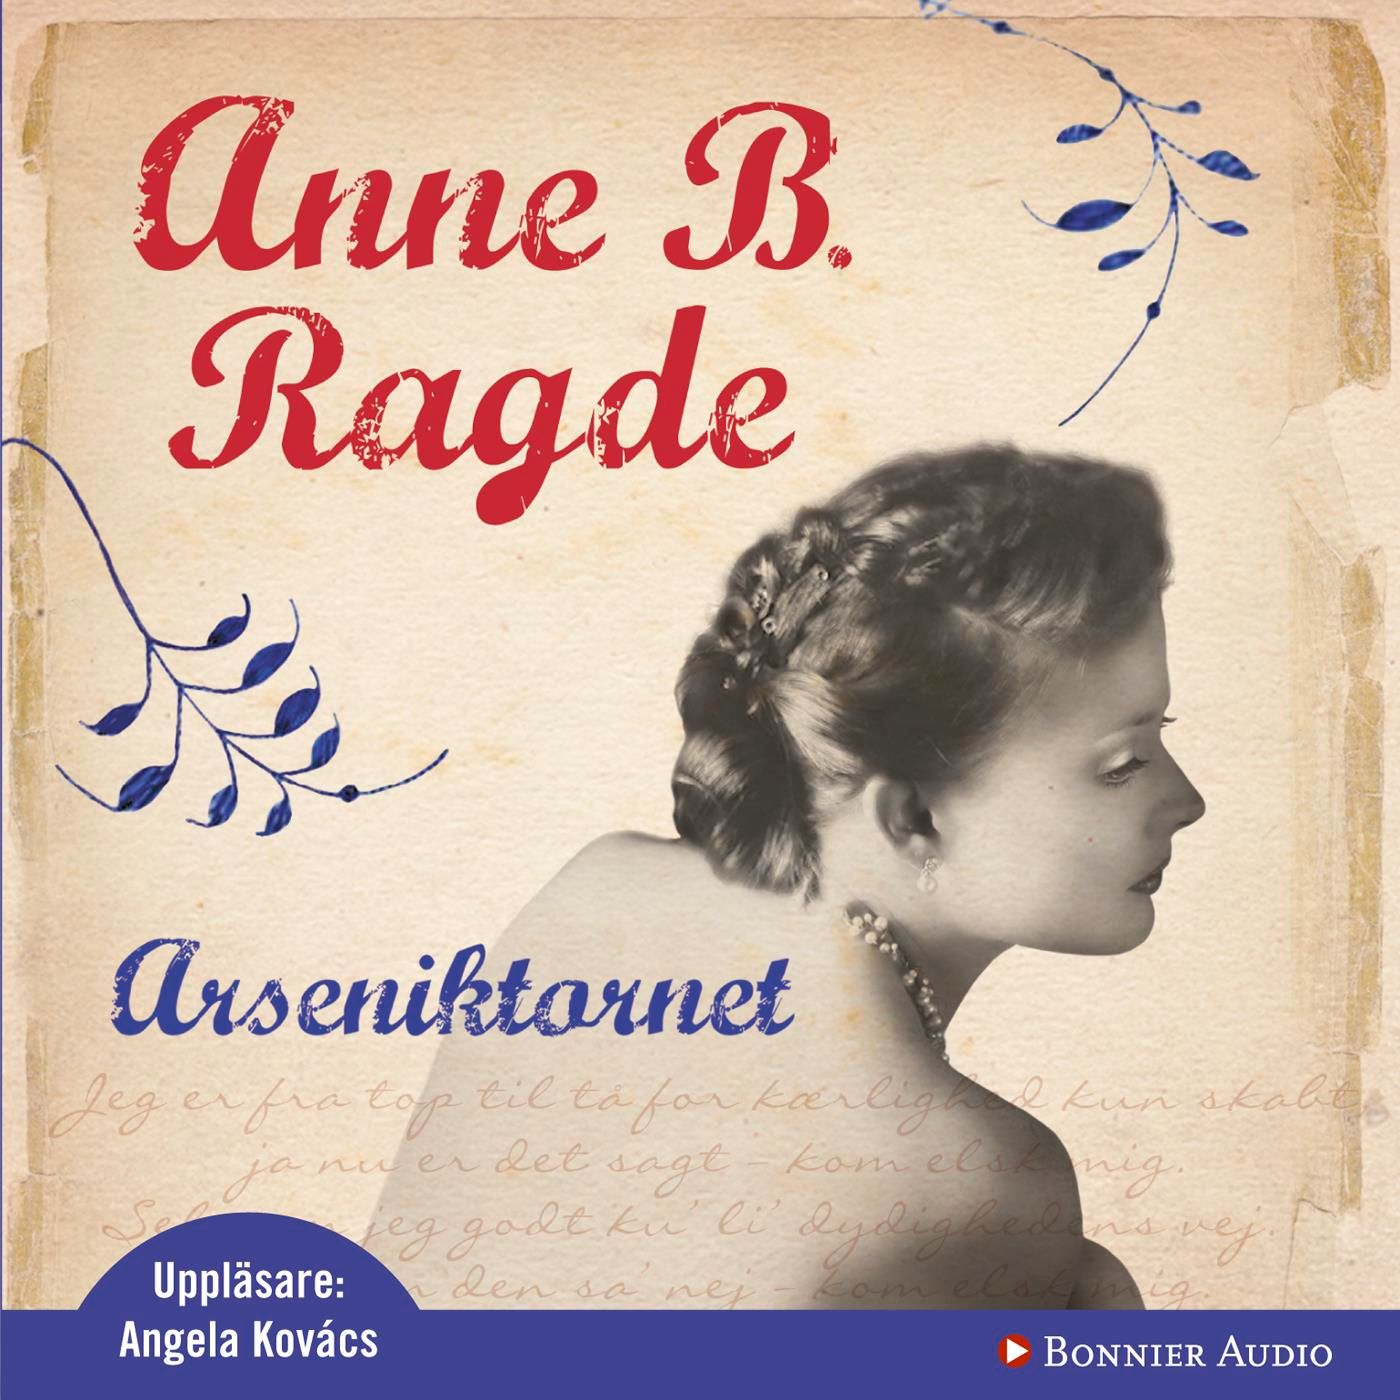 Arseniktornet, ljudbok av Anne B. Ragde